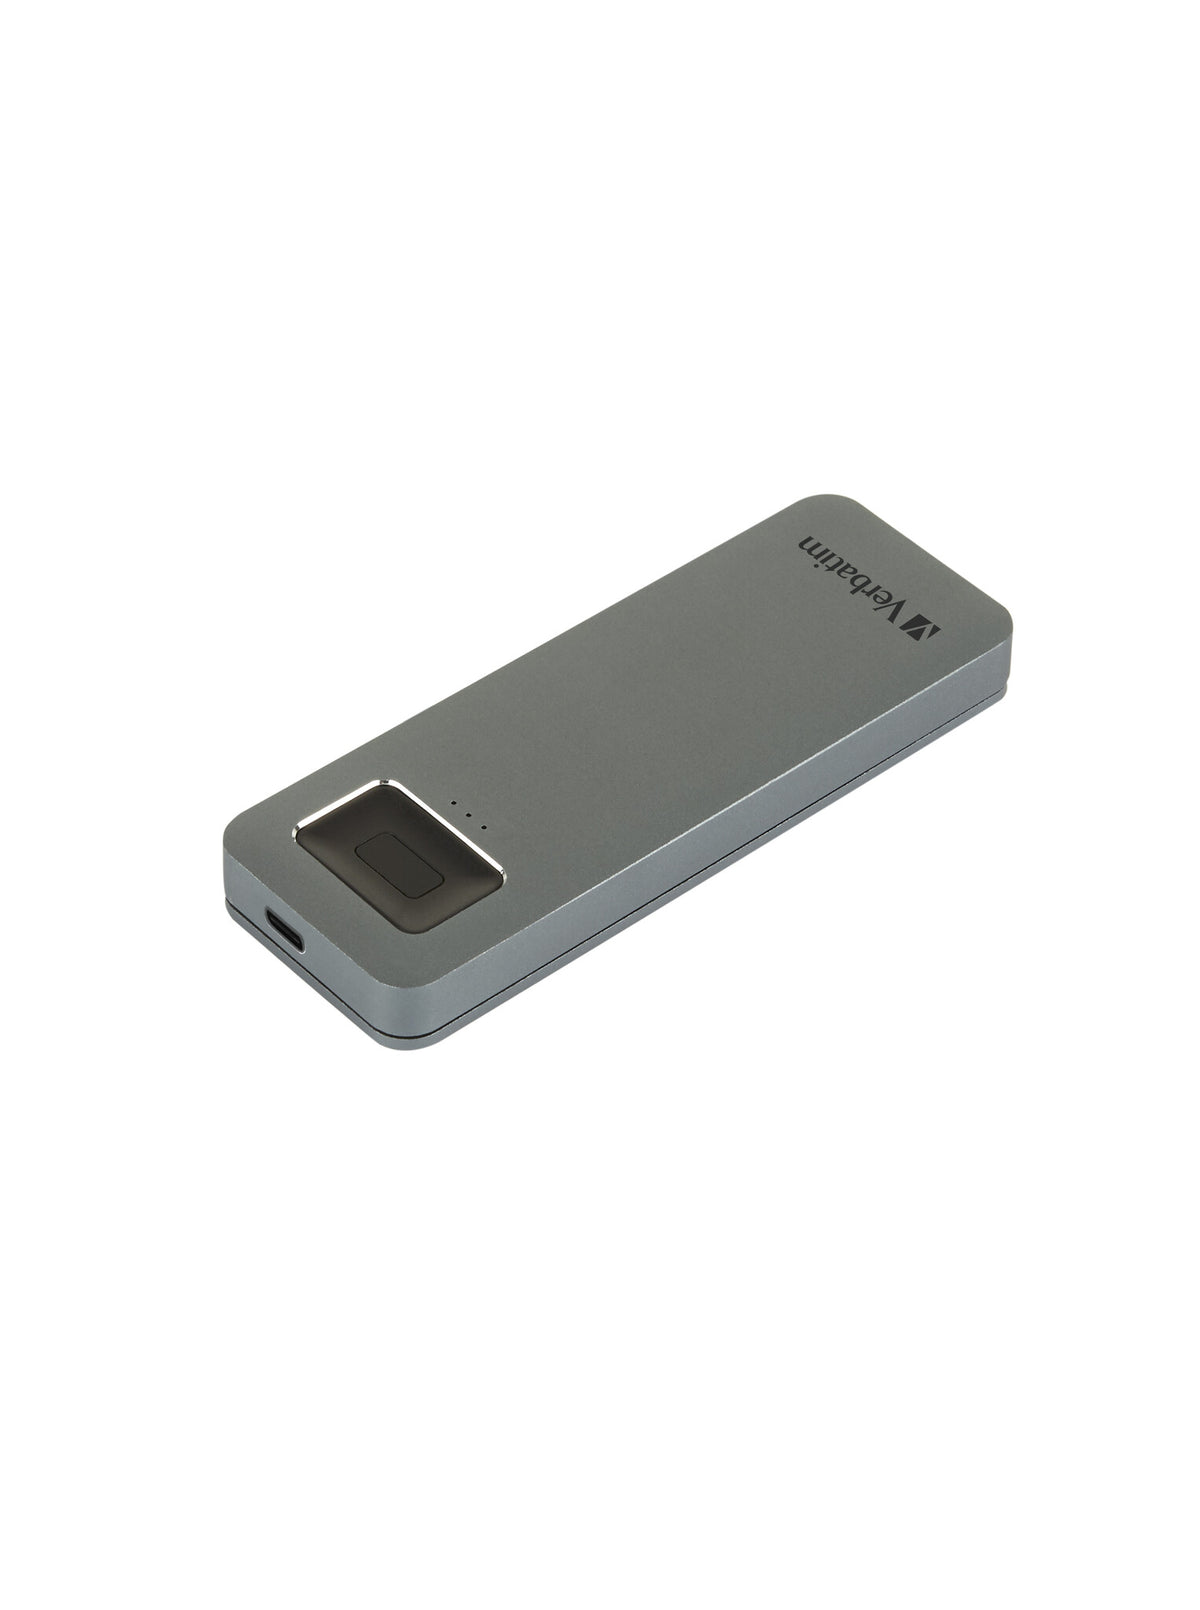 Verbatim Executive Fingerprint Secure - USB 3.1 Gen 1 External SSD - 1 TB